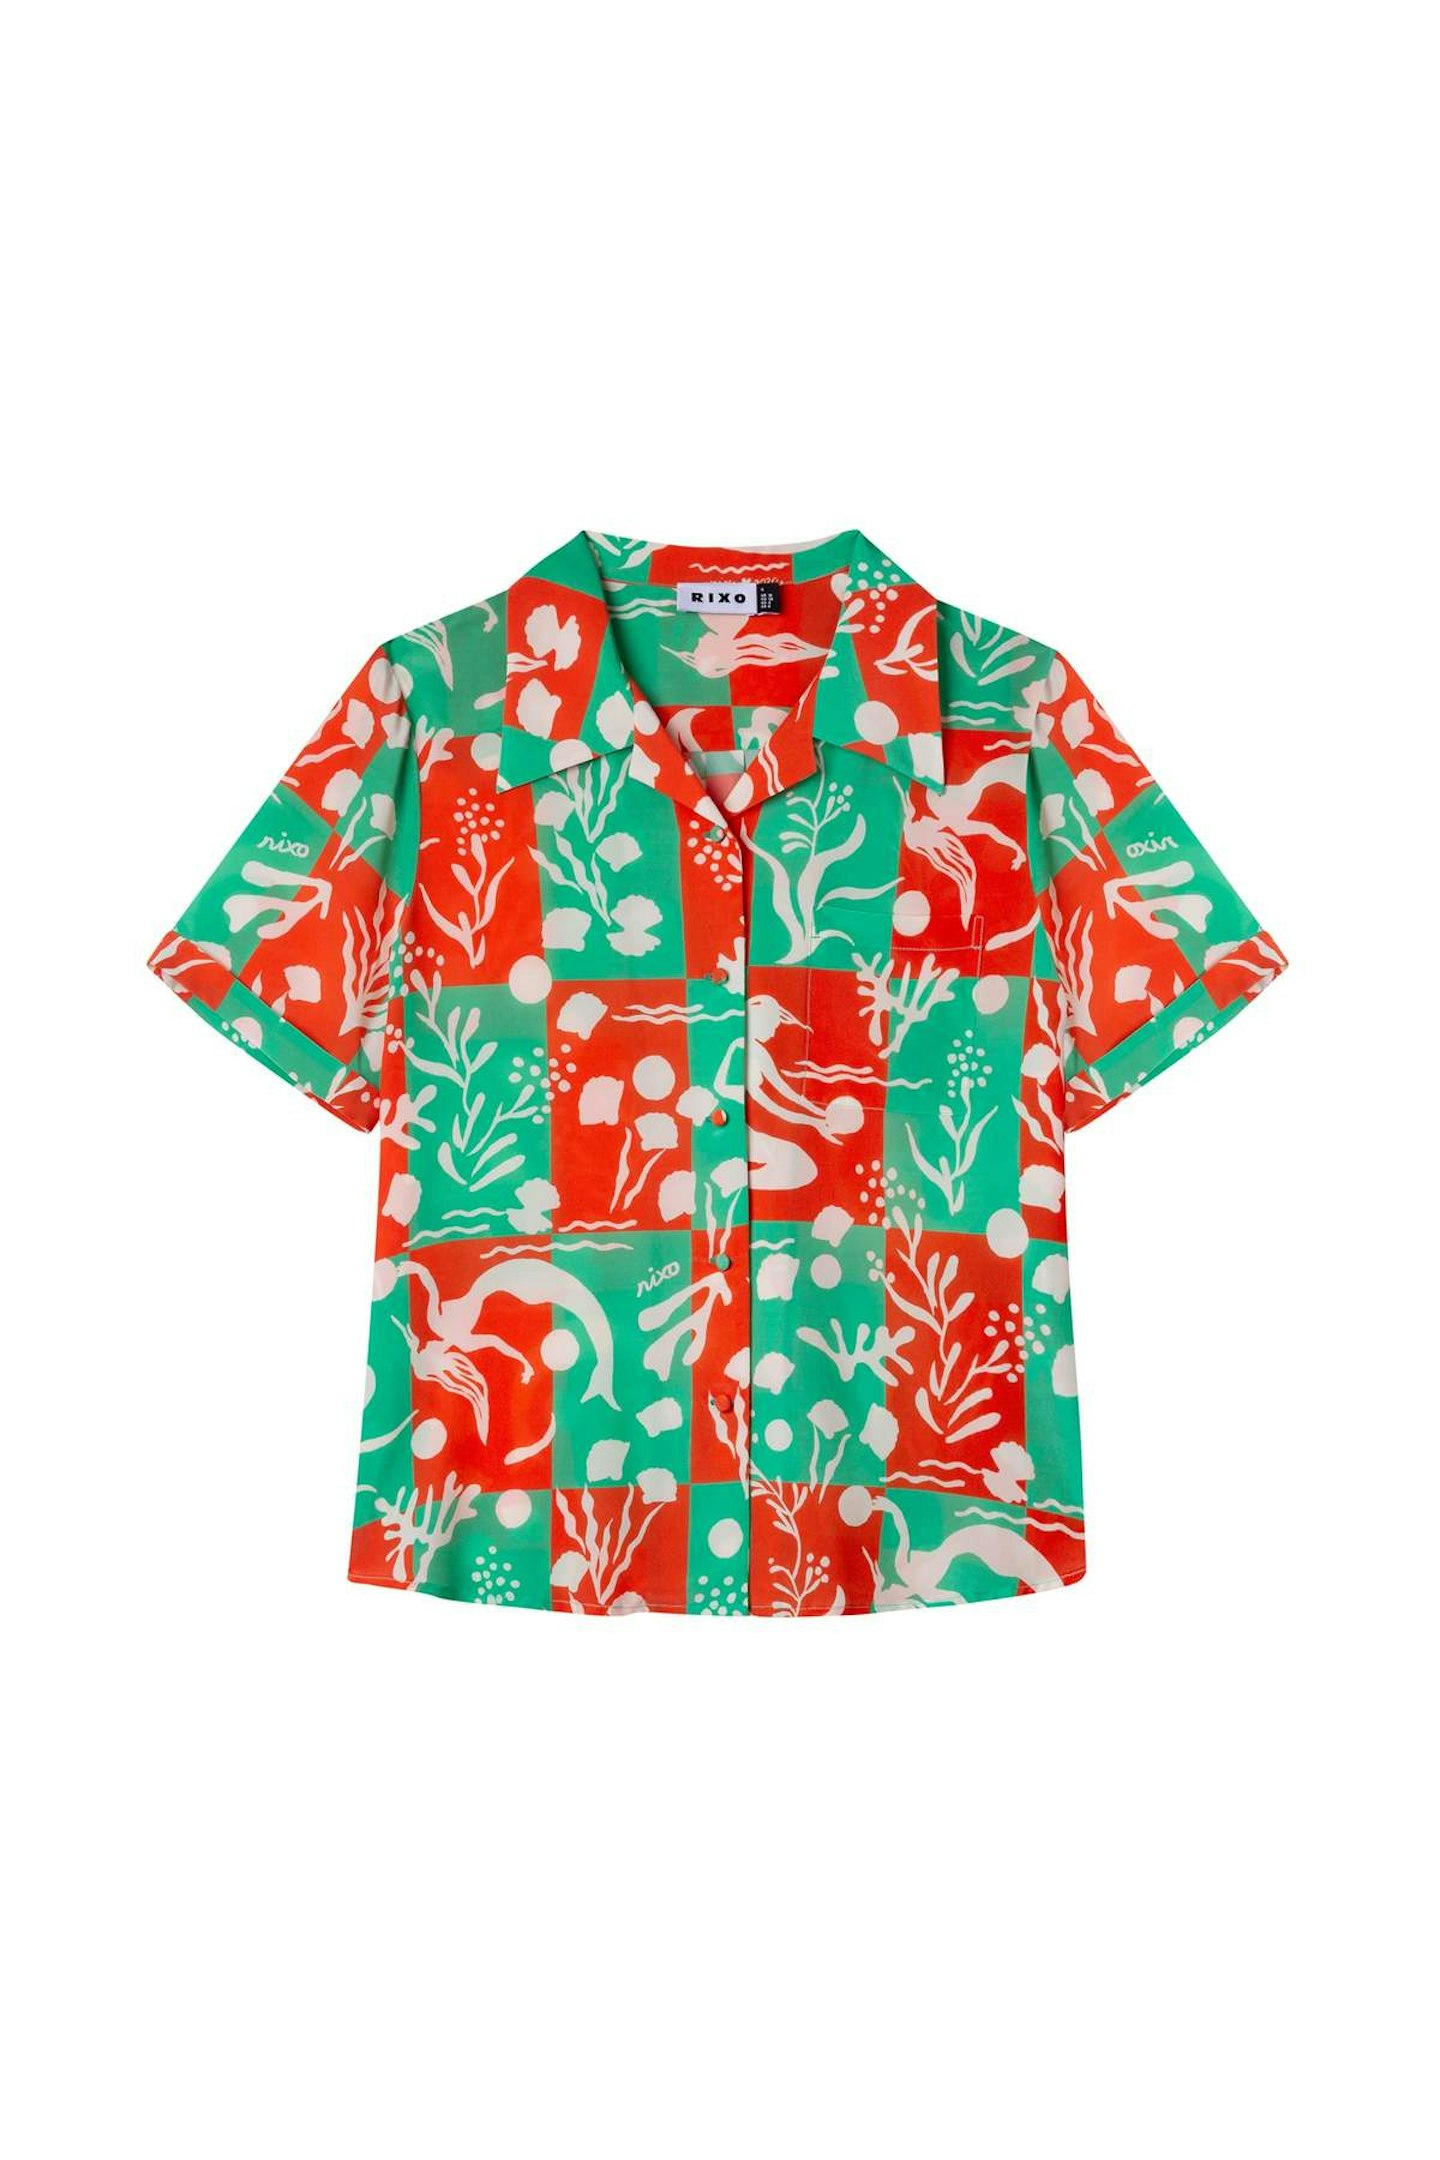 Rixo, Mono Sea Life Peach Green Collared Shirt, £195